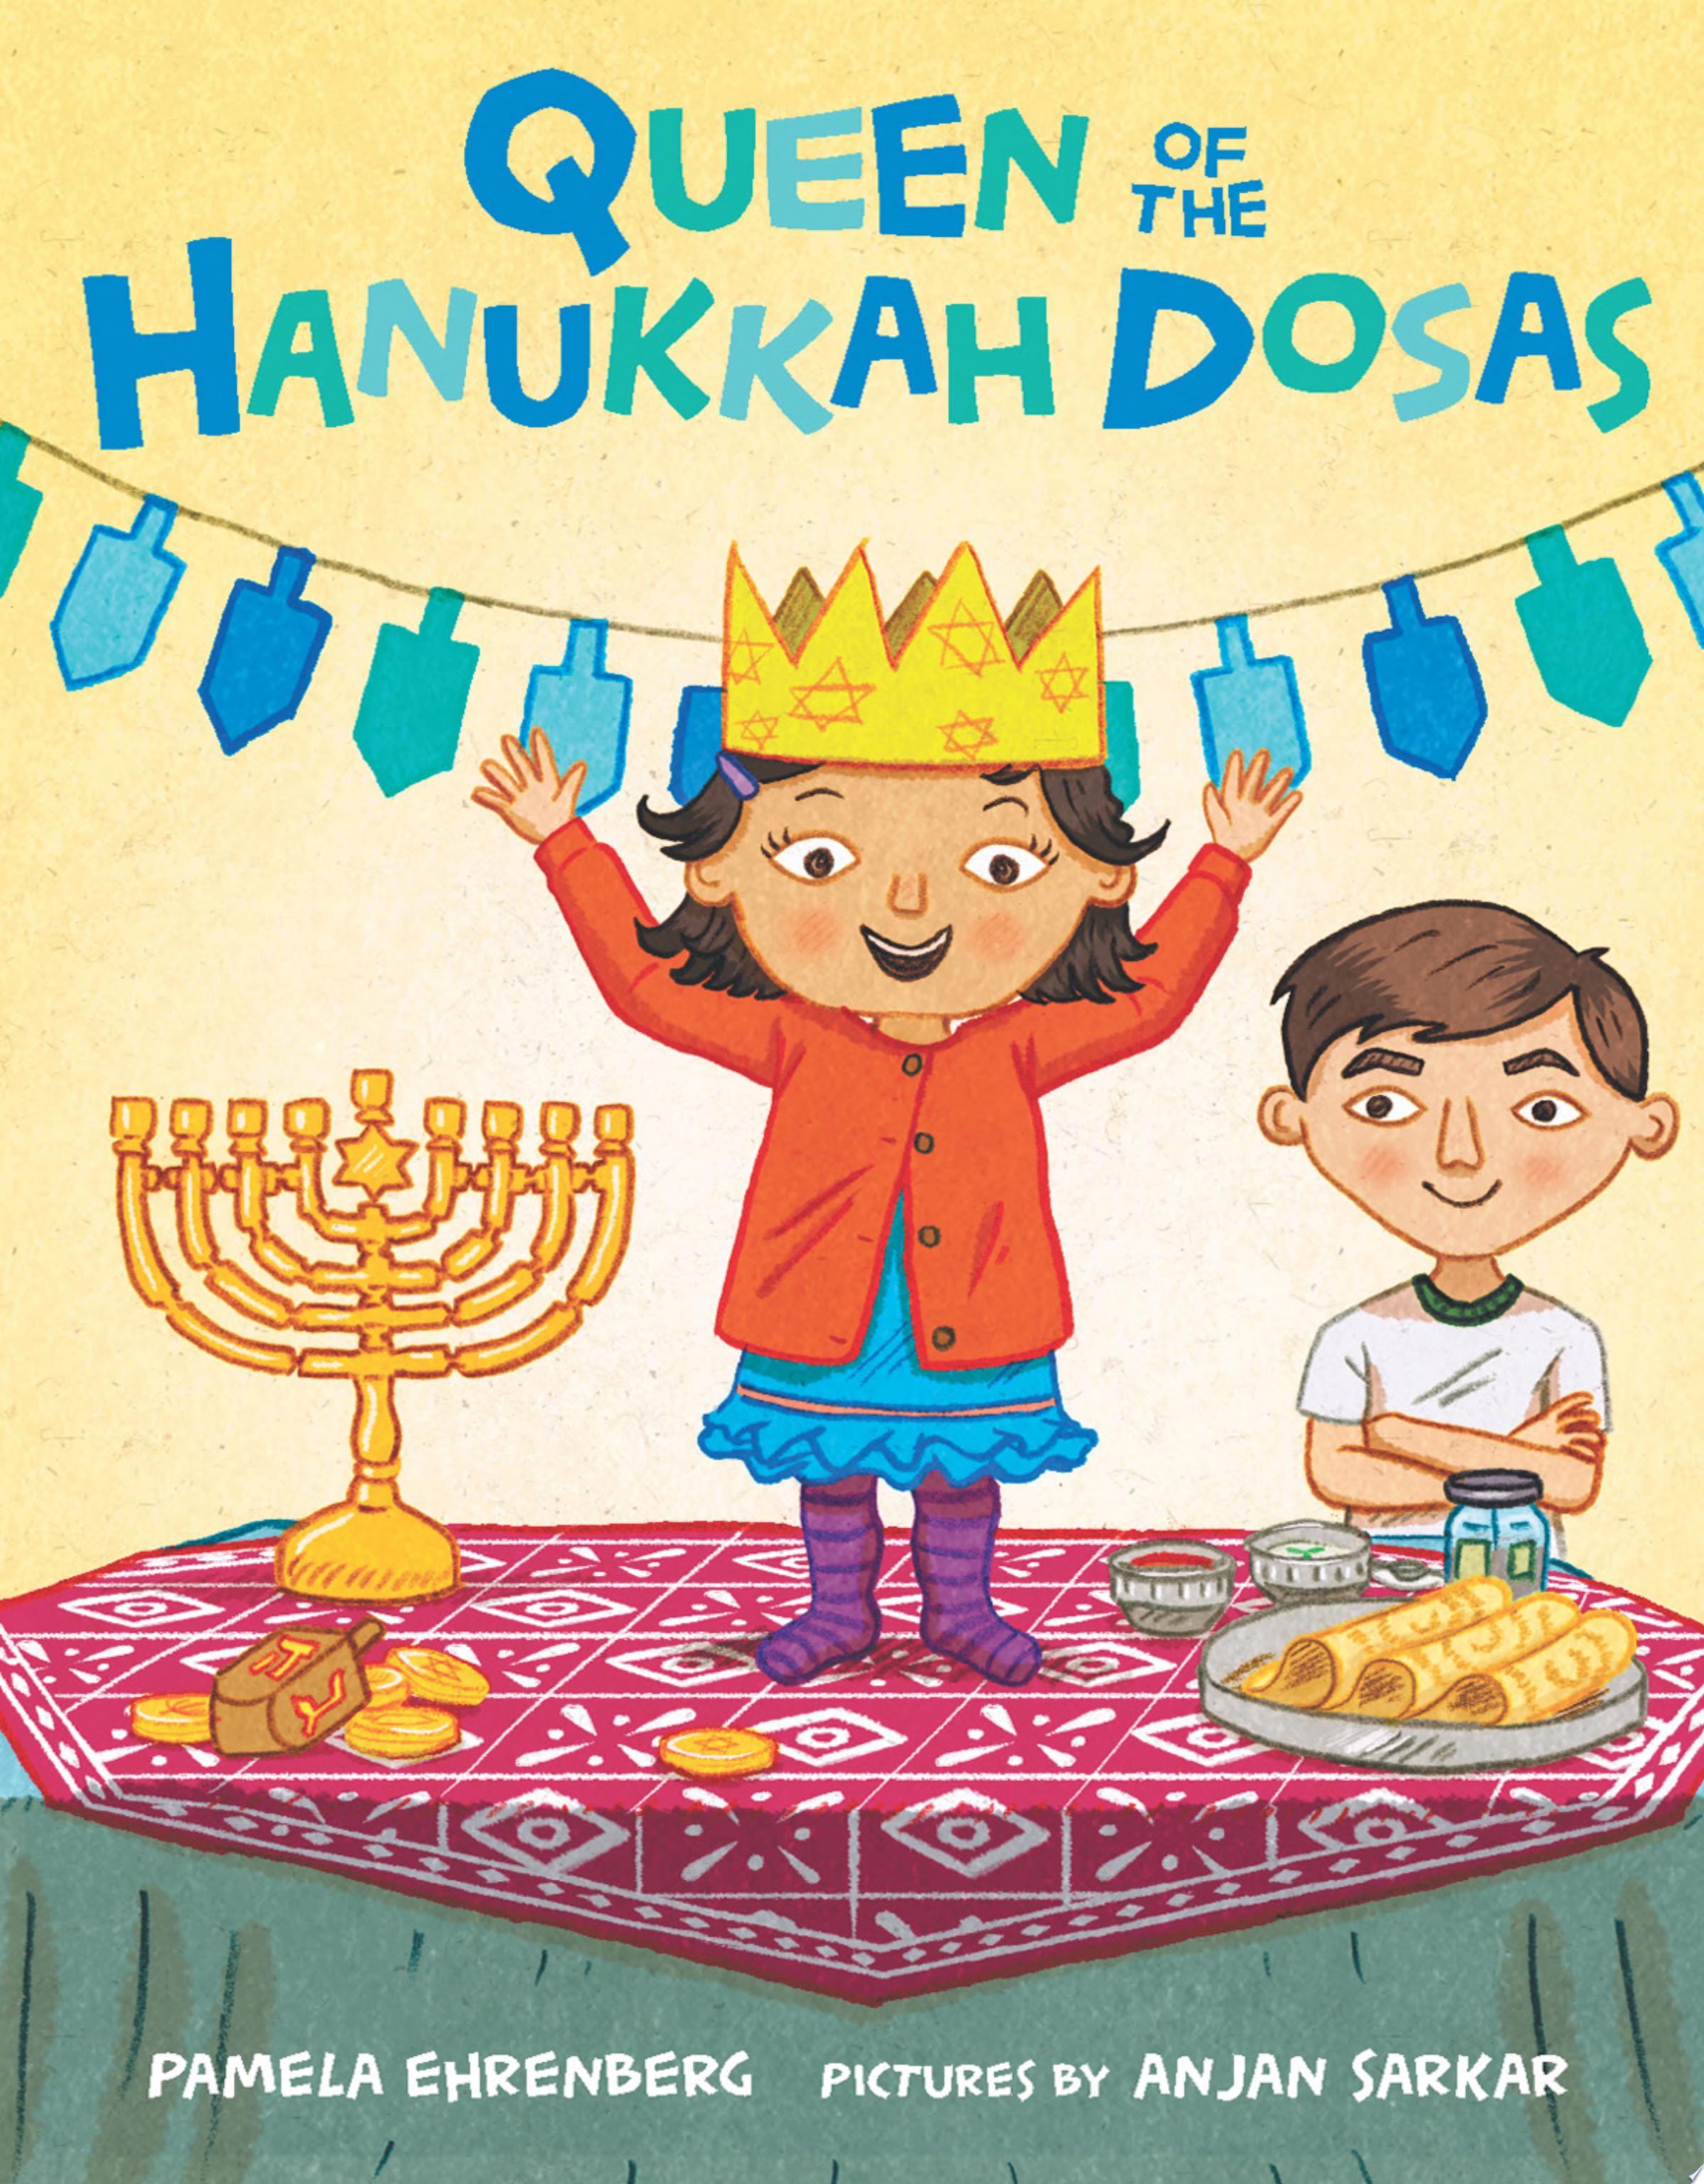 Image for "Queen of the Hanukkah Dosas"